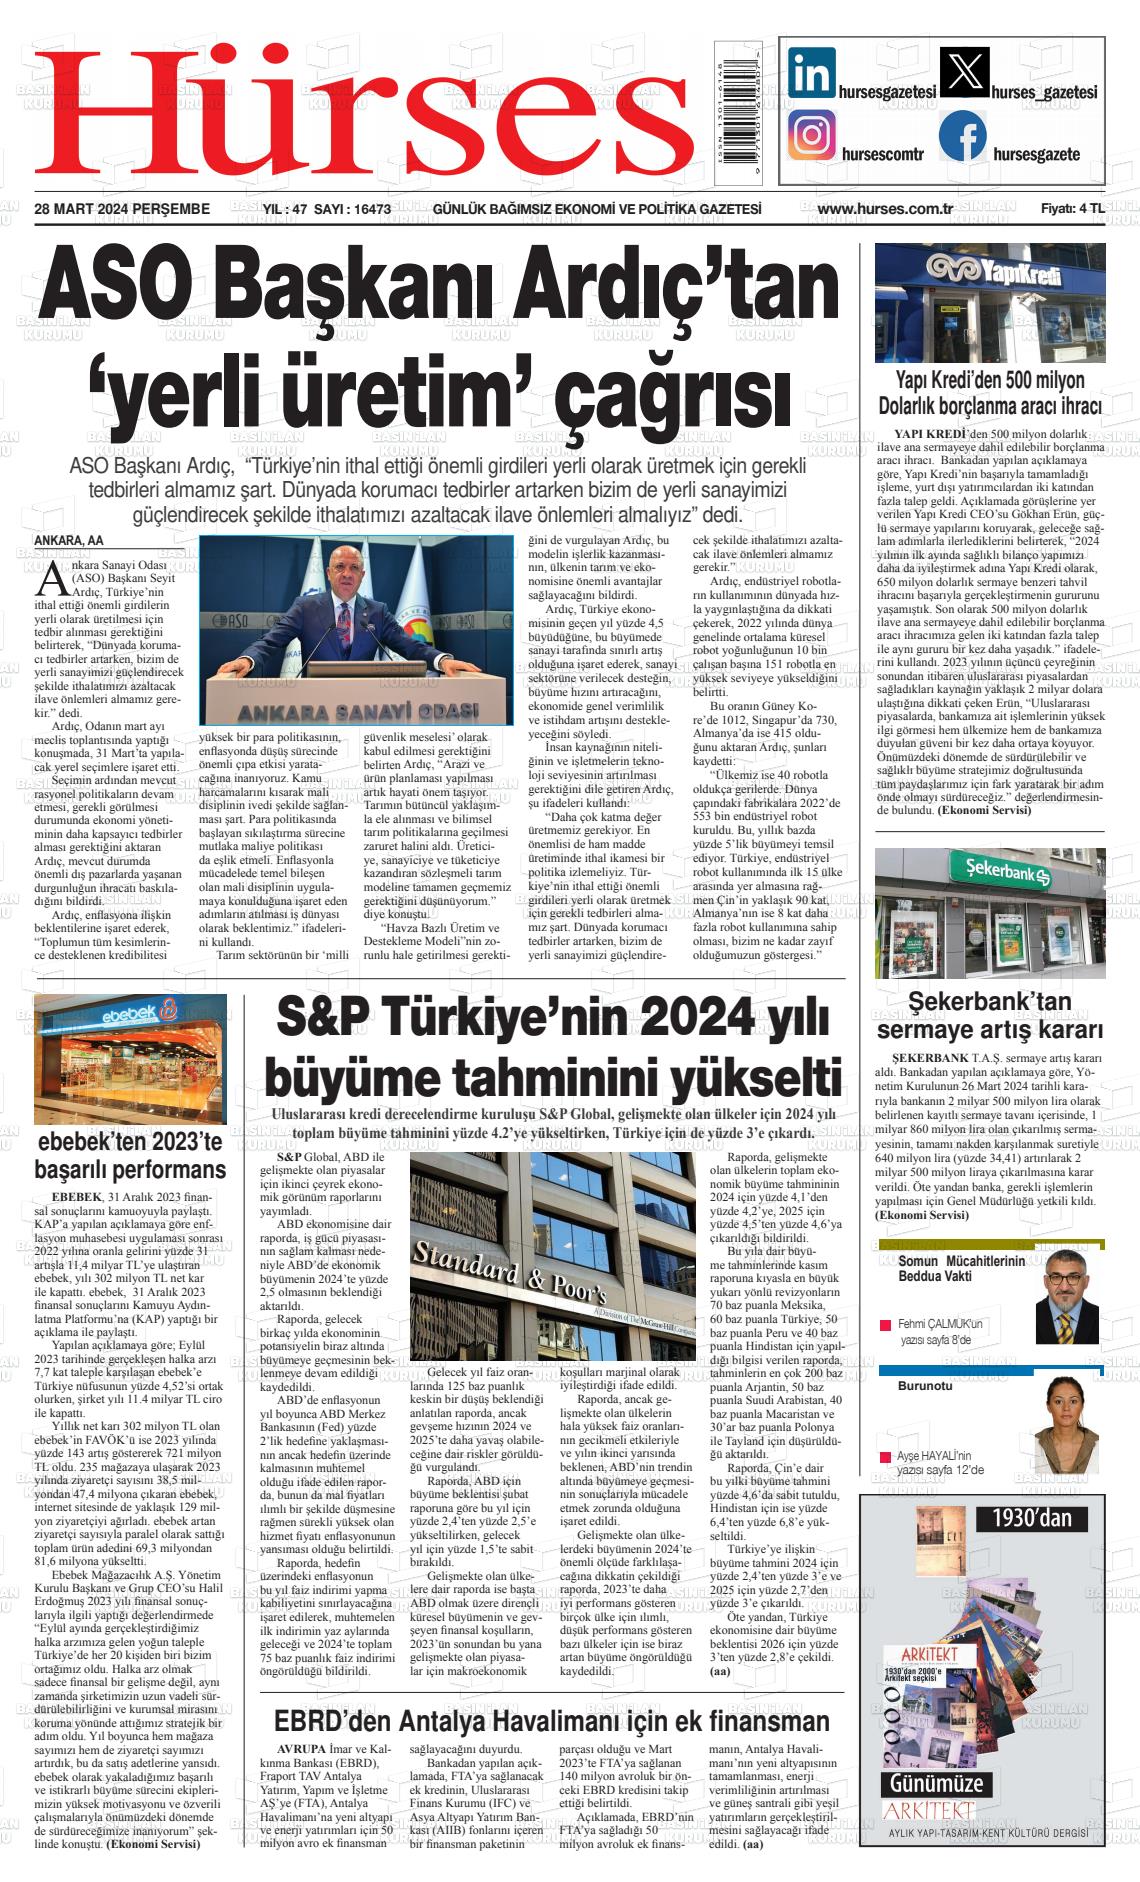 28 Mart 2024 İstanbul Hürses gazetesi Gazete Manşeti